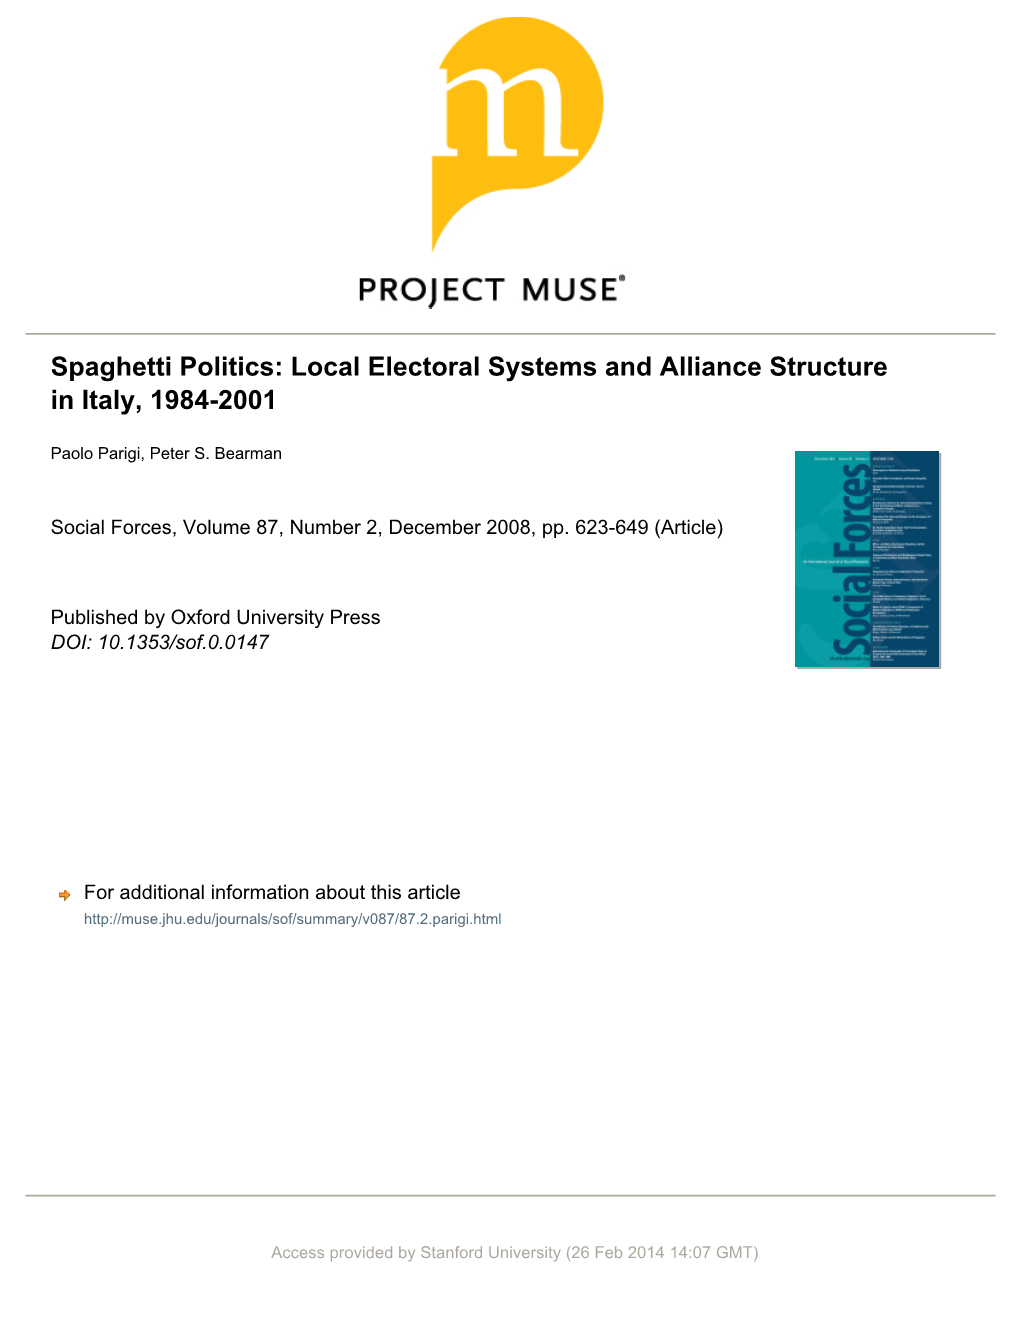 Spaghetti Politics: Local Electoral Systems and Alliance Structure in Italy, 1984-2001